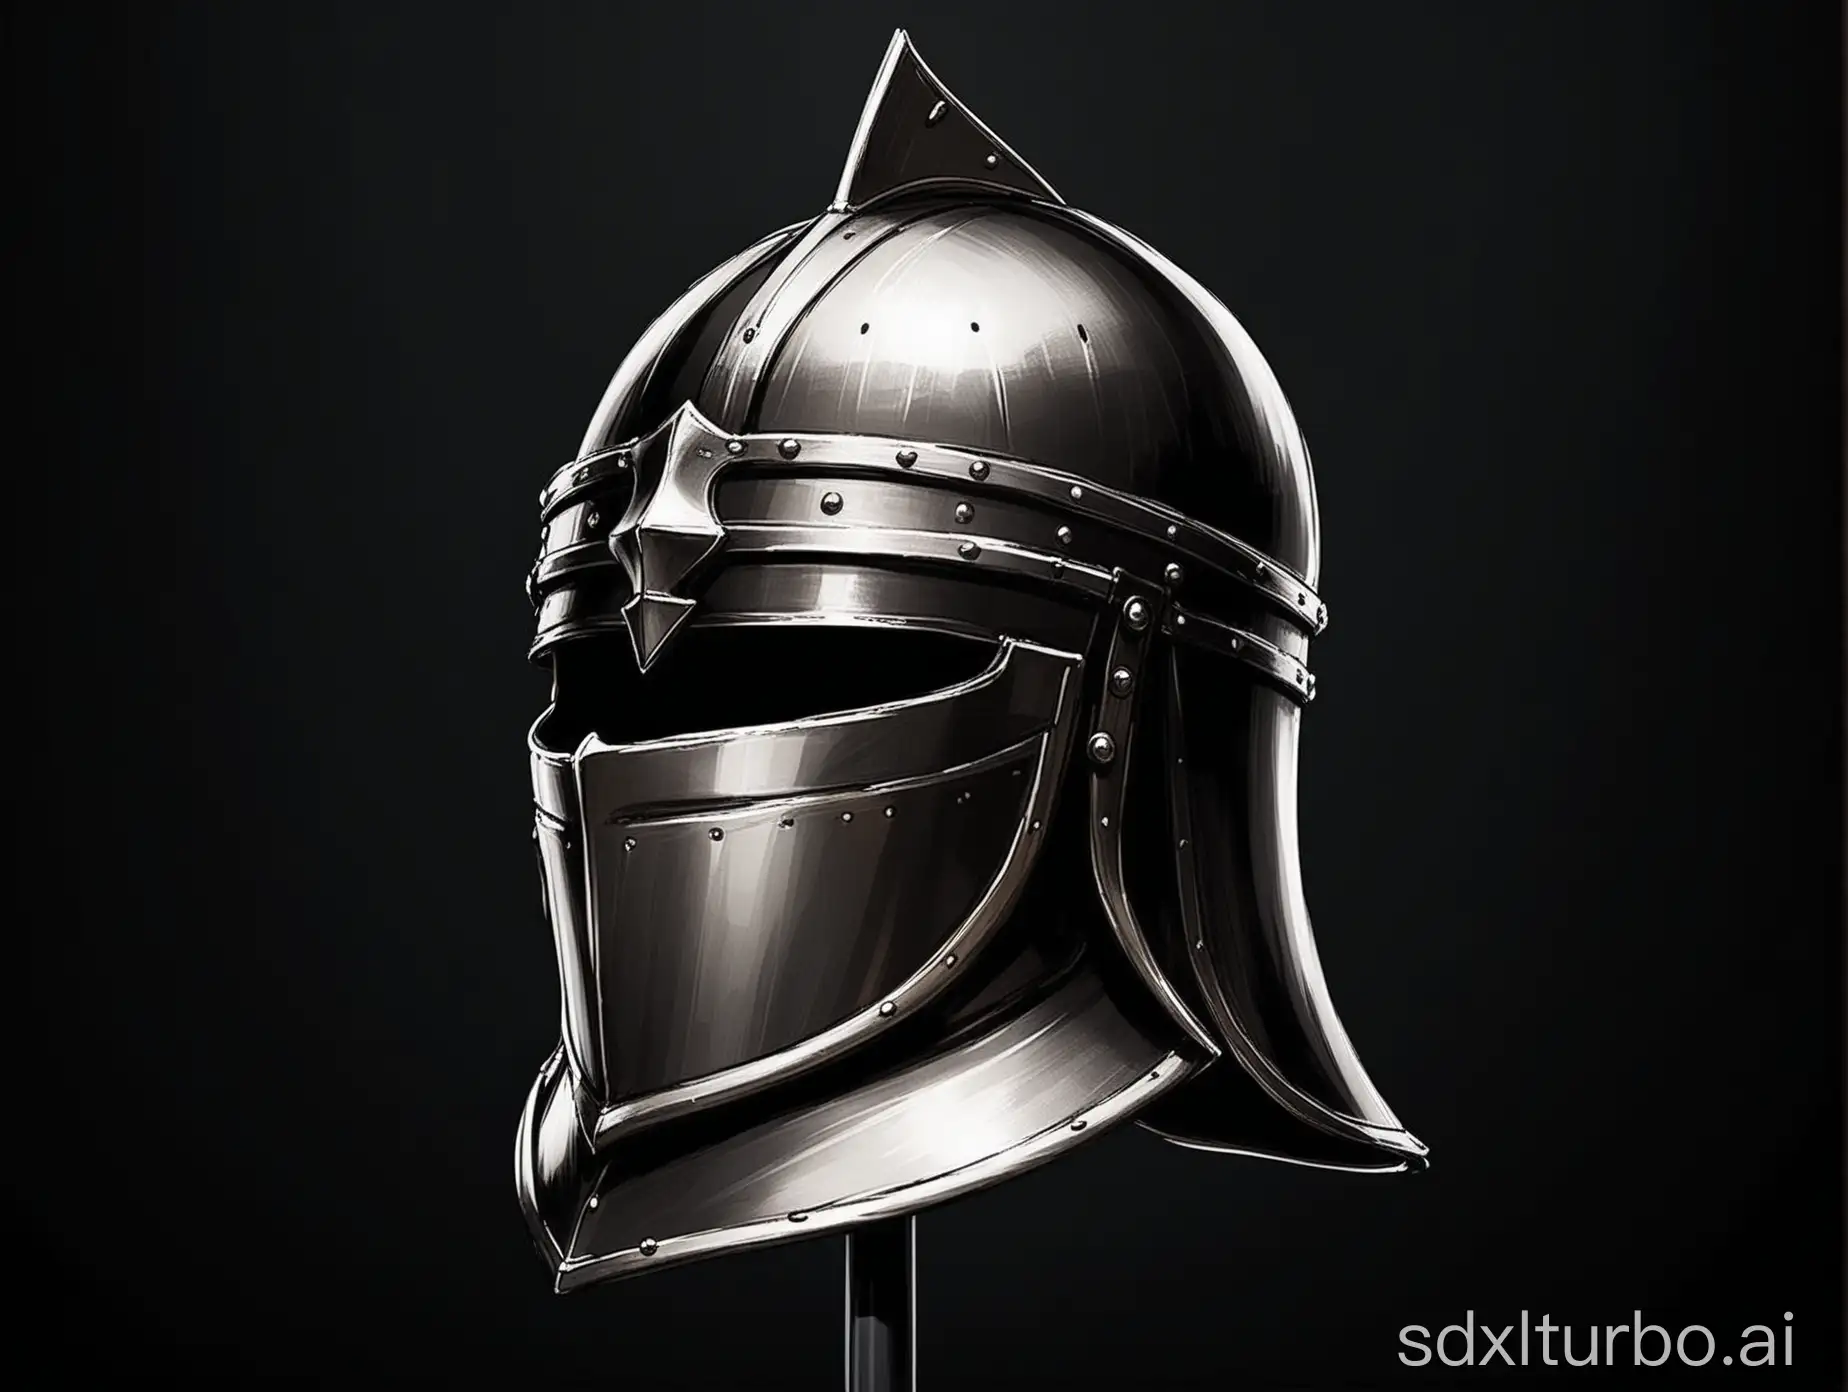 A medieval helmet on a black background